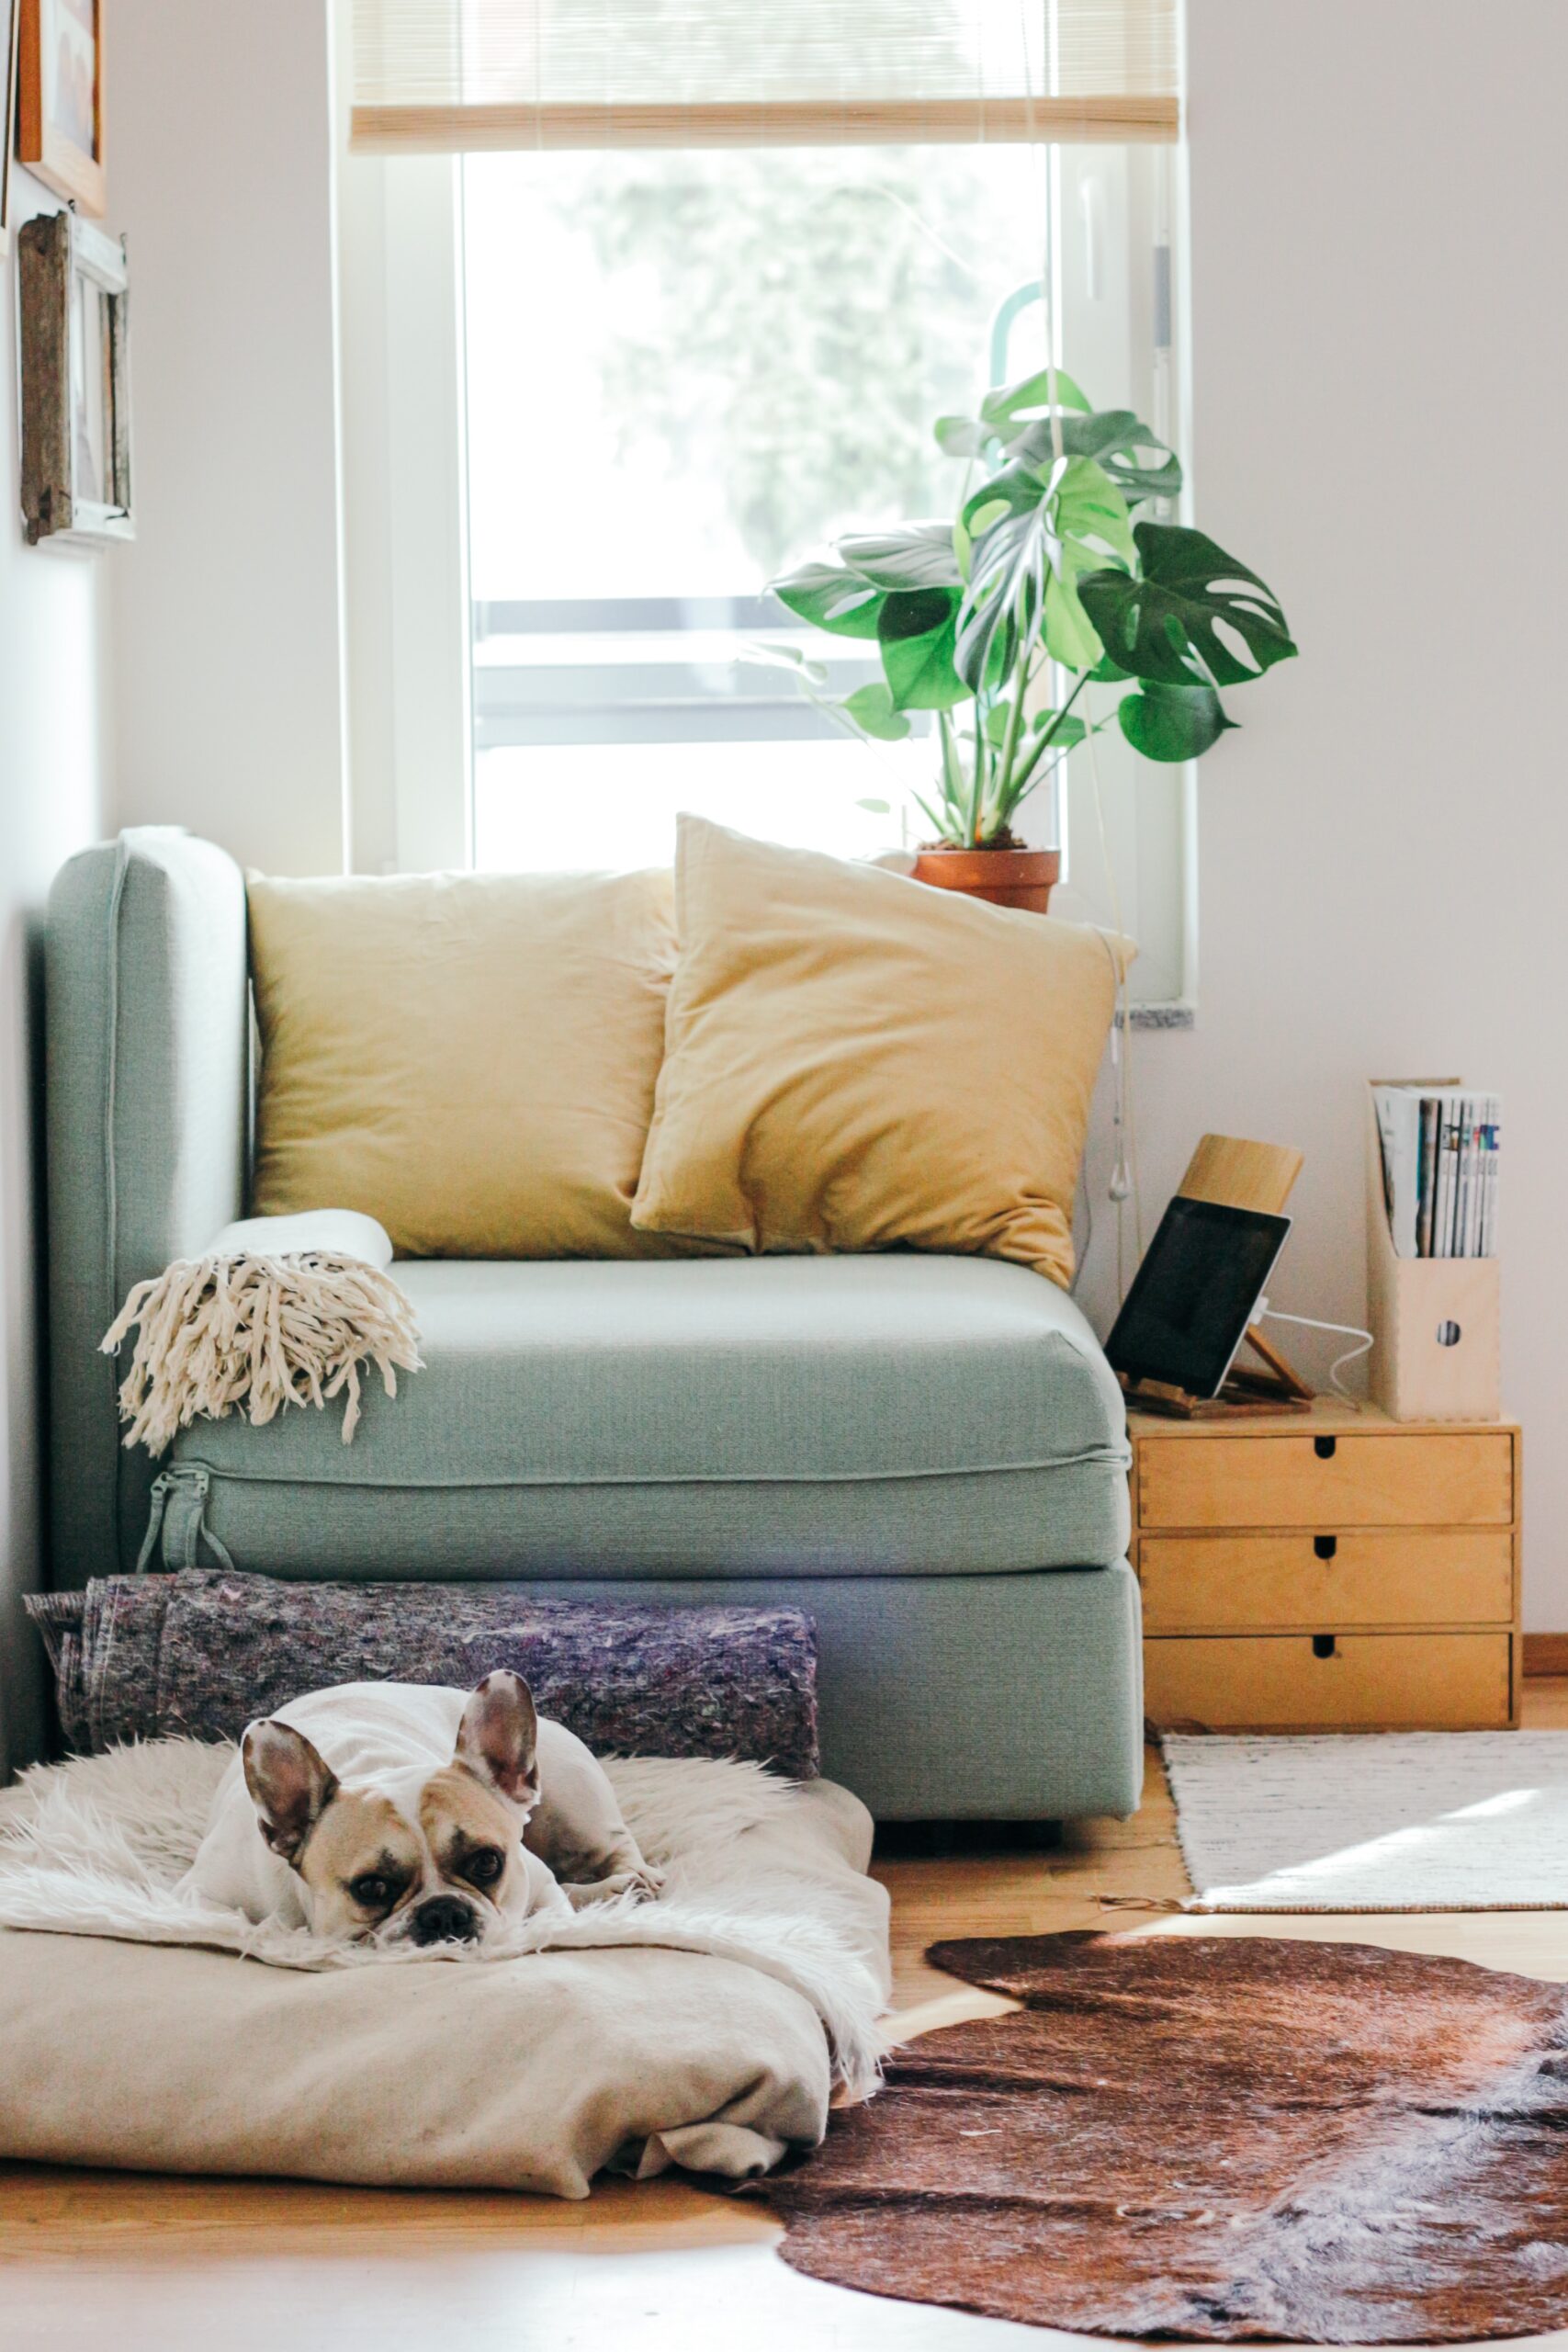 How Do I Create A Dog-friendly Home Interior And Furnishings?